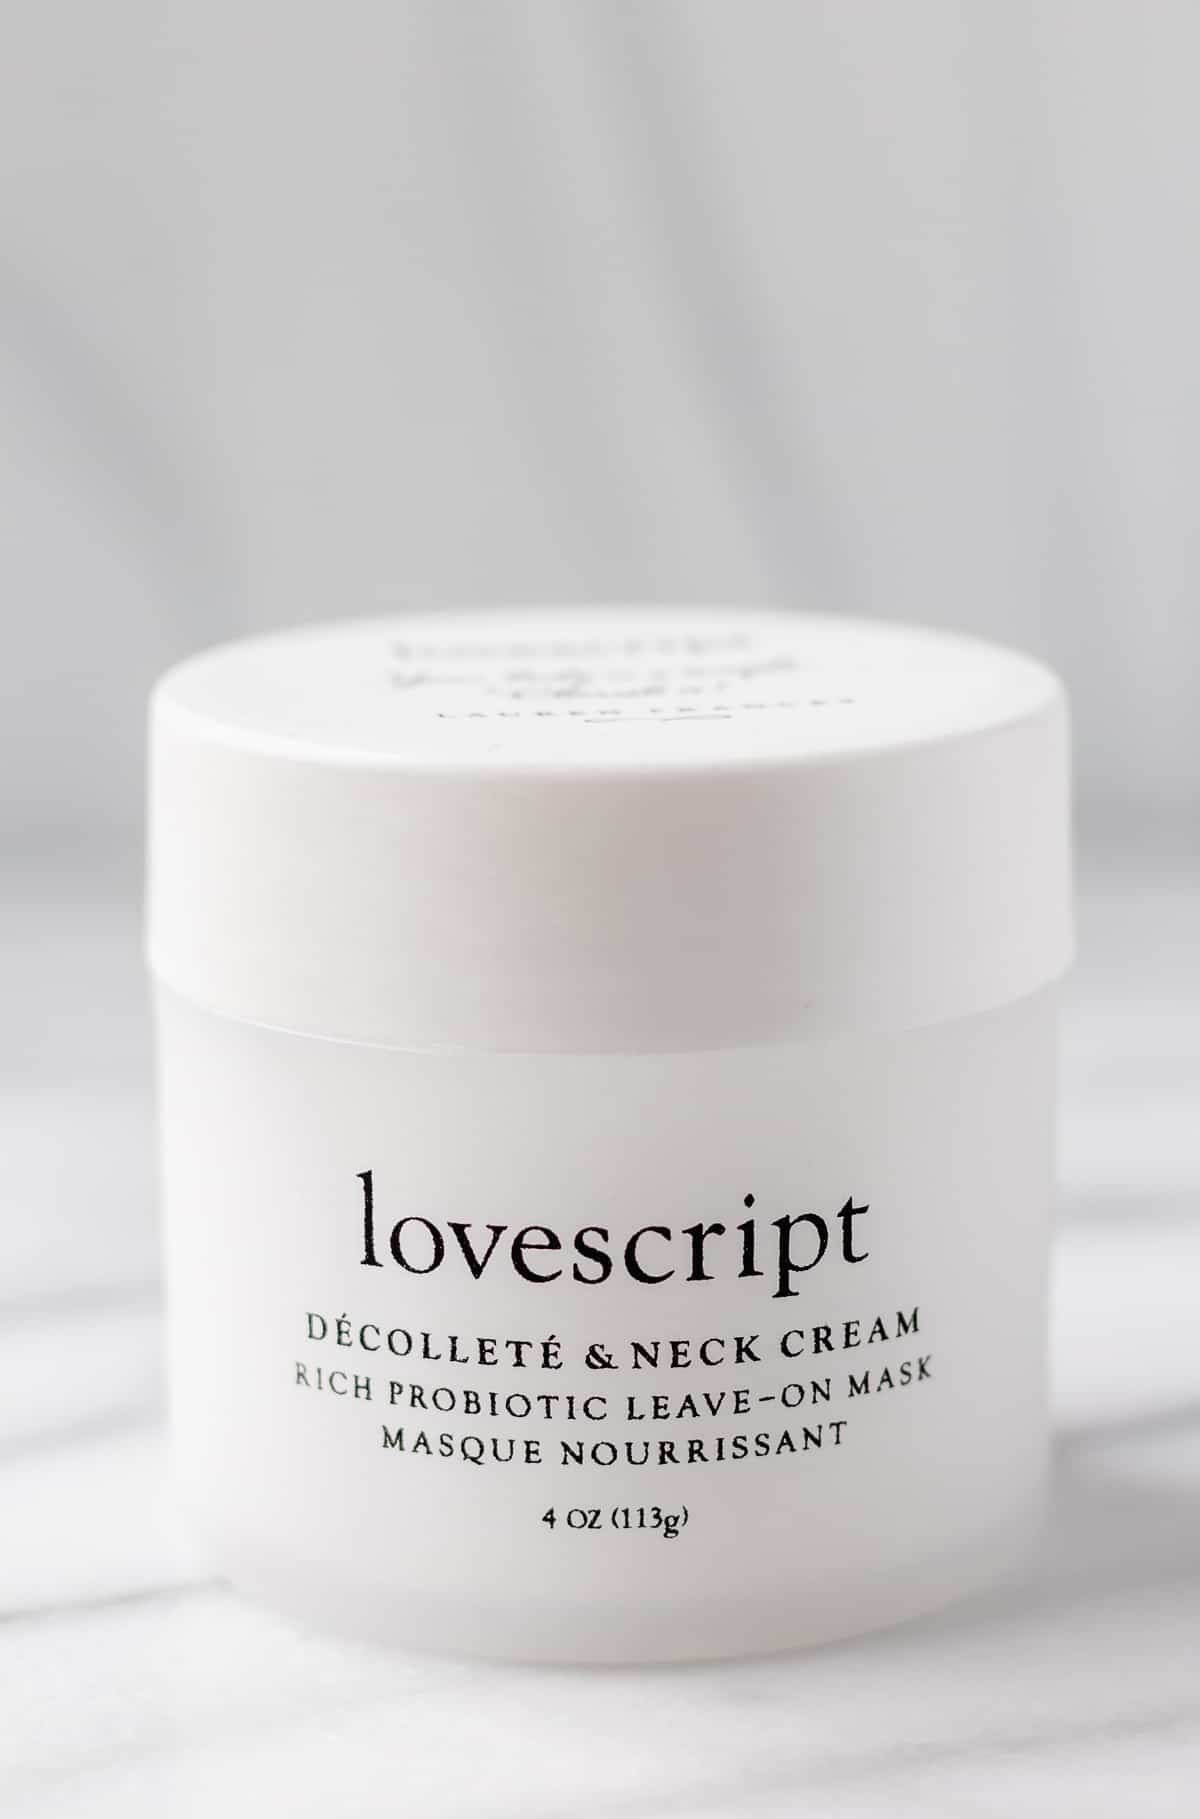 Lovescript Decollete and Neck Cream Jar on a light background